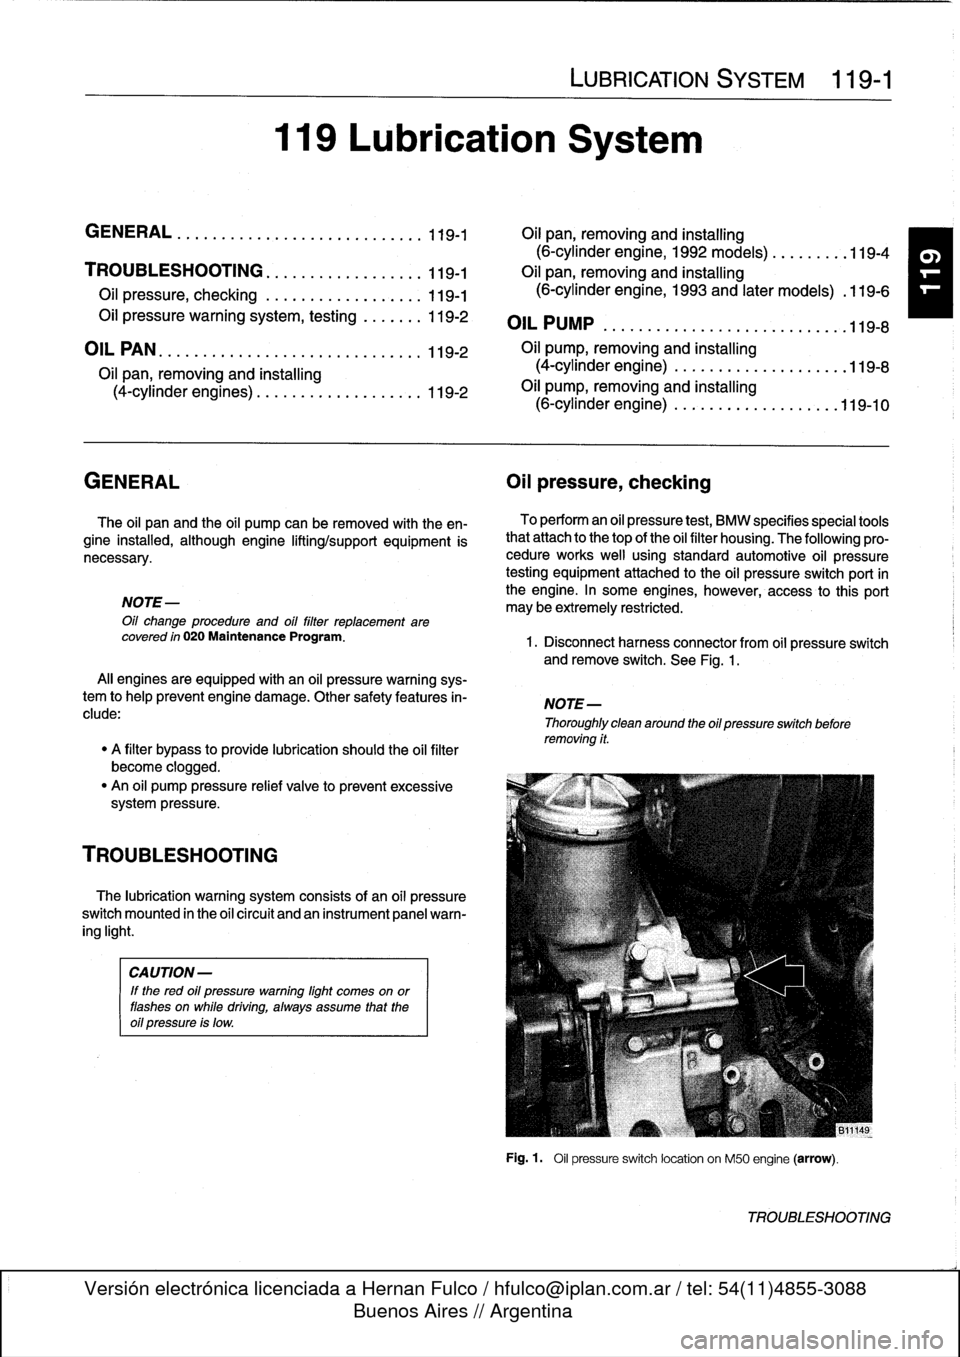 BMW 318i 1997 E36 Workshop Manual 
119
Lubrication
System

LUBRICATION
SYSTEM

	

119-1

GENERAL
.
.
.
.
.
.
...
.
.
.
.
.
.
.
...,
,
...
.
.
.
.
119-1

	

OH
pan,
removing
and
installing

(6-cylinder
engine,
1992
models)
.
.
.
.
.
.
